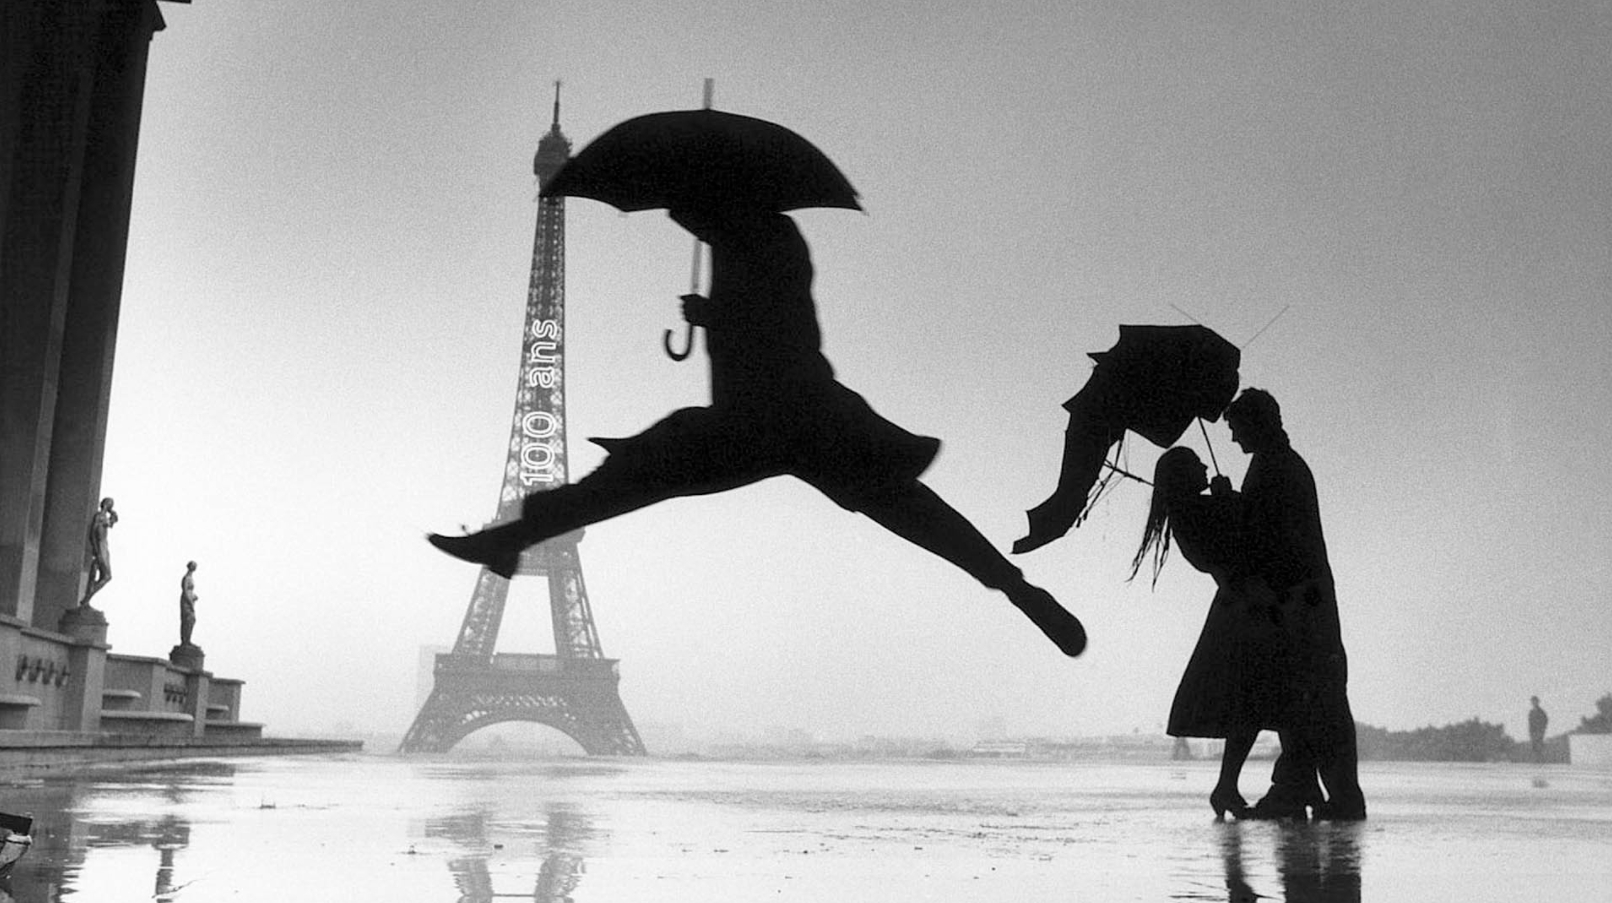 Photographes célèbres : Henri Cartier-Bresson